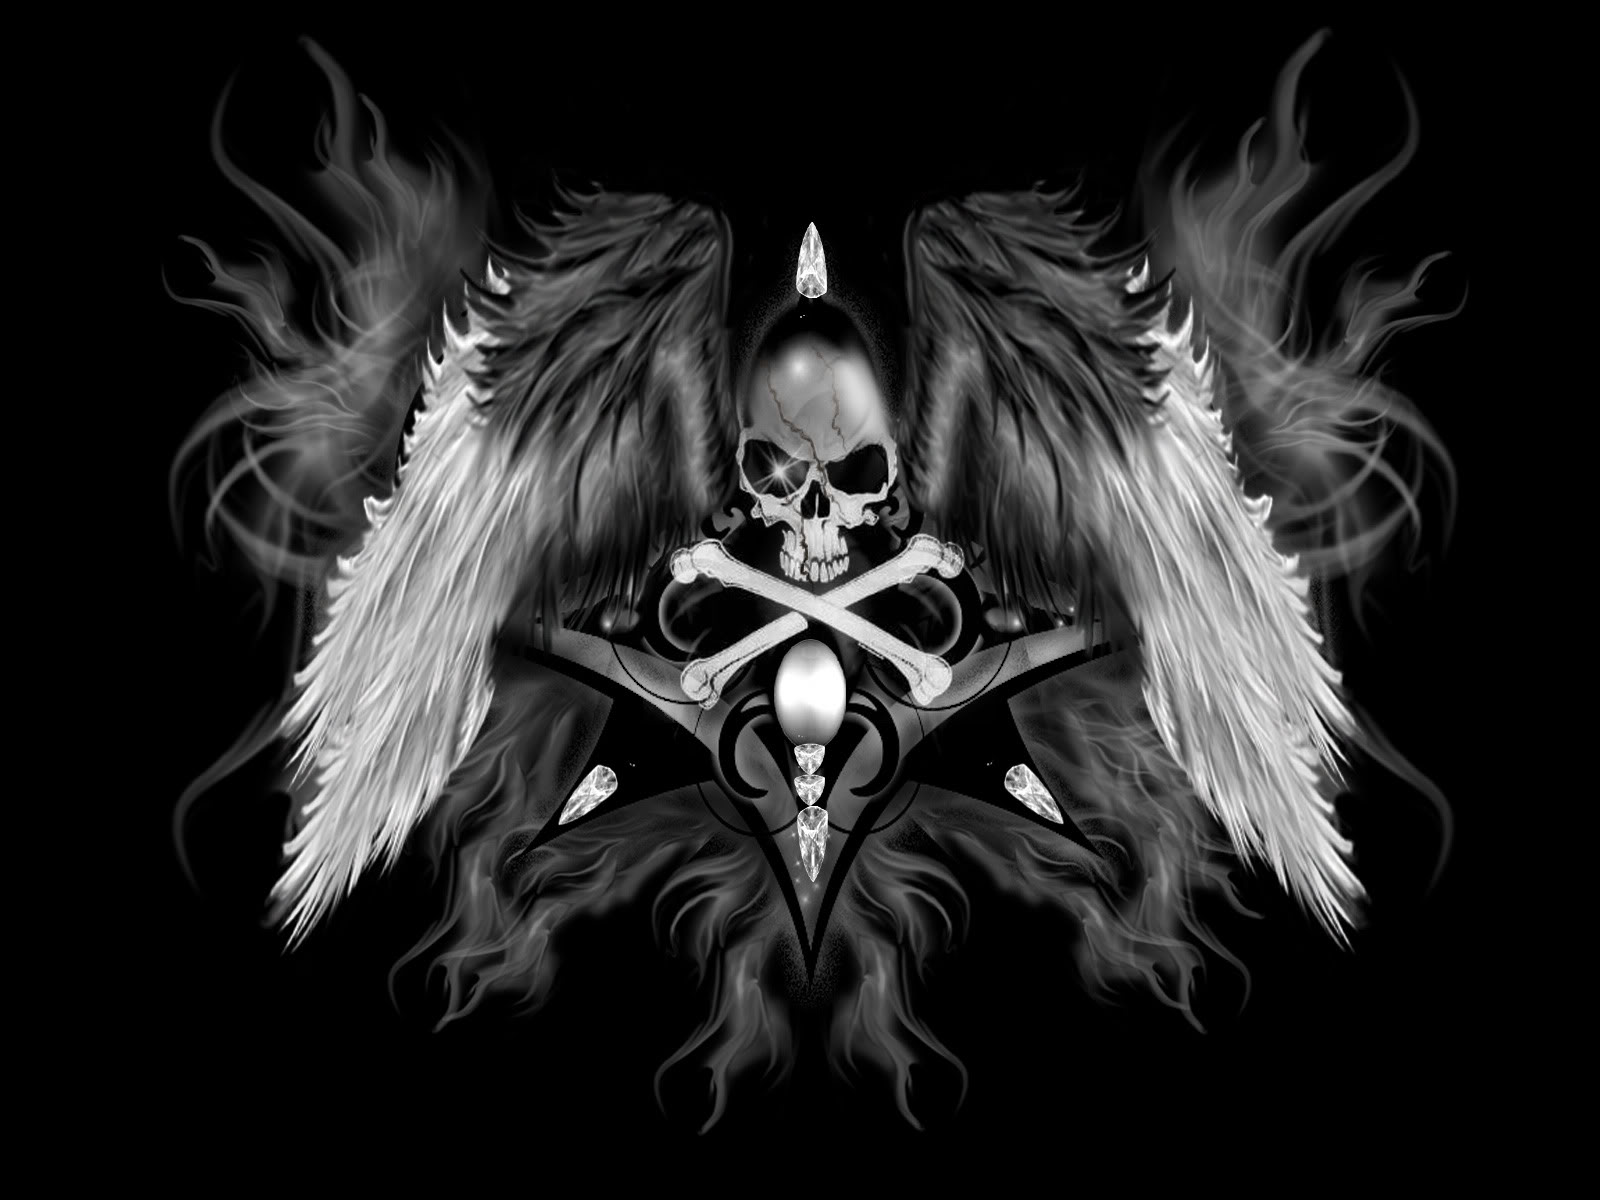 heavy metal, evil, skull, music, death angel, death metal, hard rock images